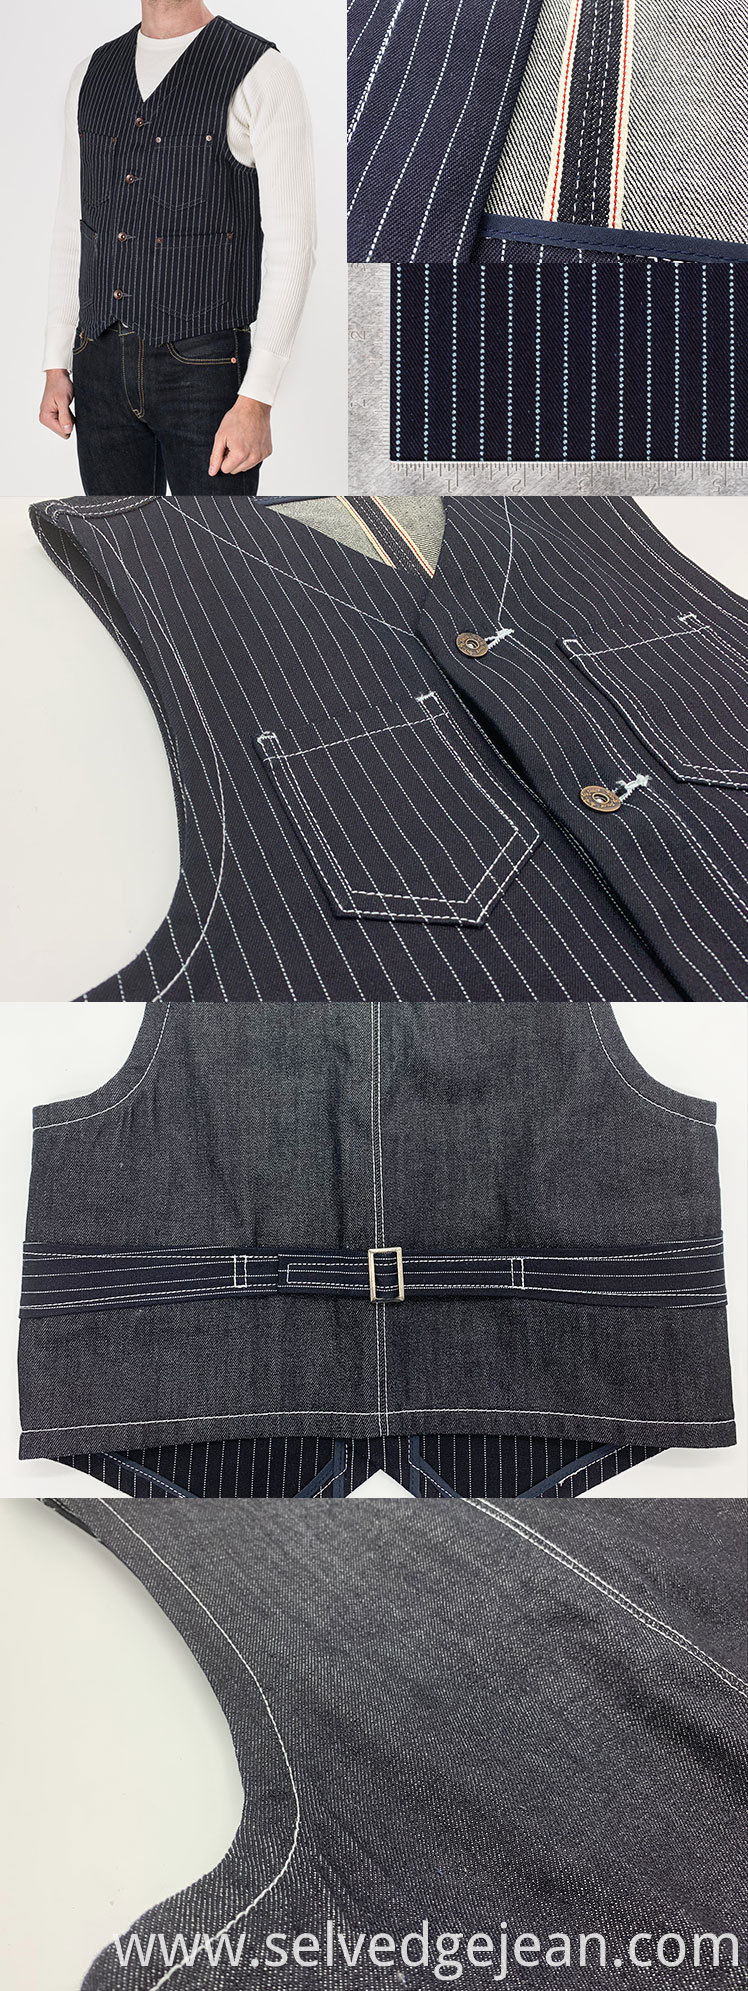 mens denim jeans material organic 100% cotton selvedge hiskory stripe denim fabric Vintage style vest jacket